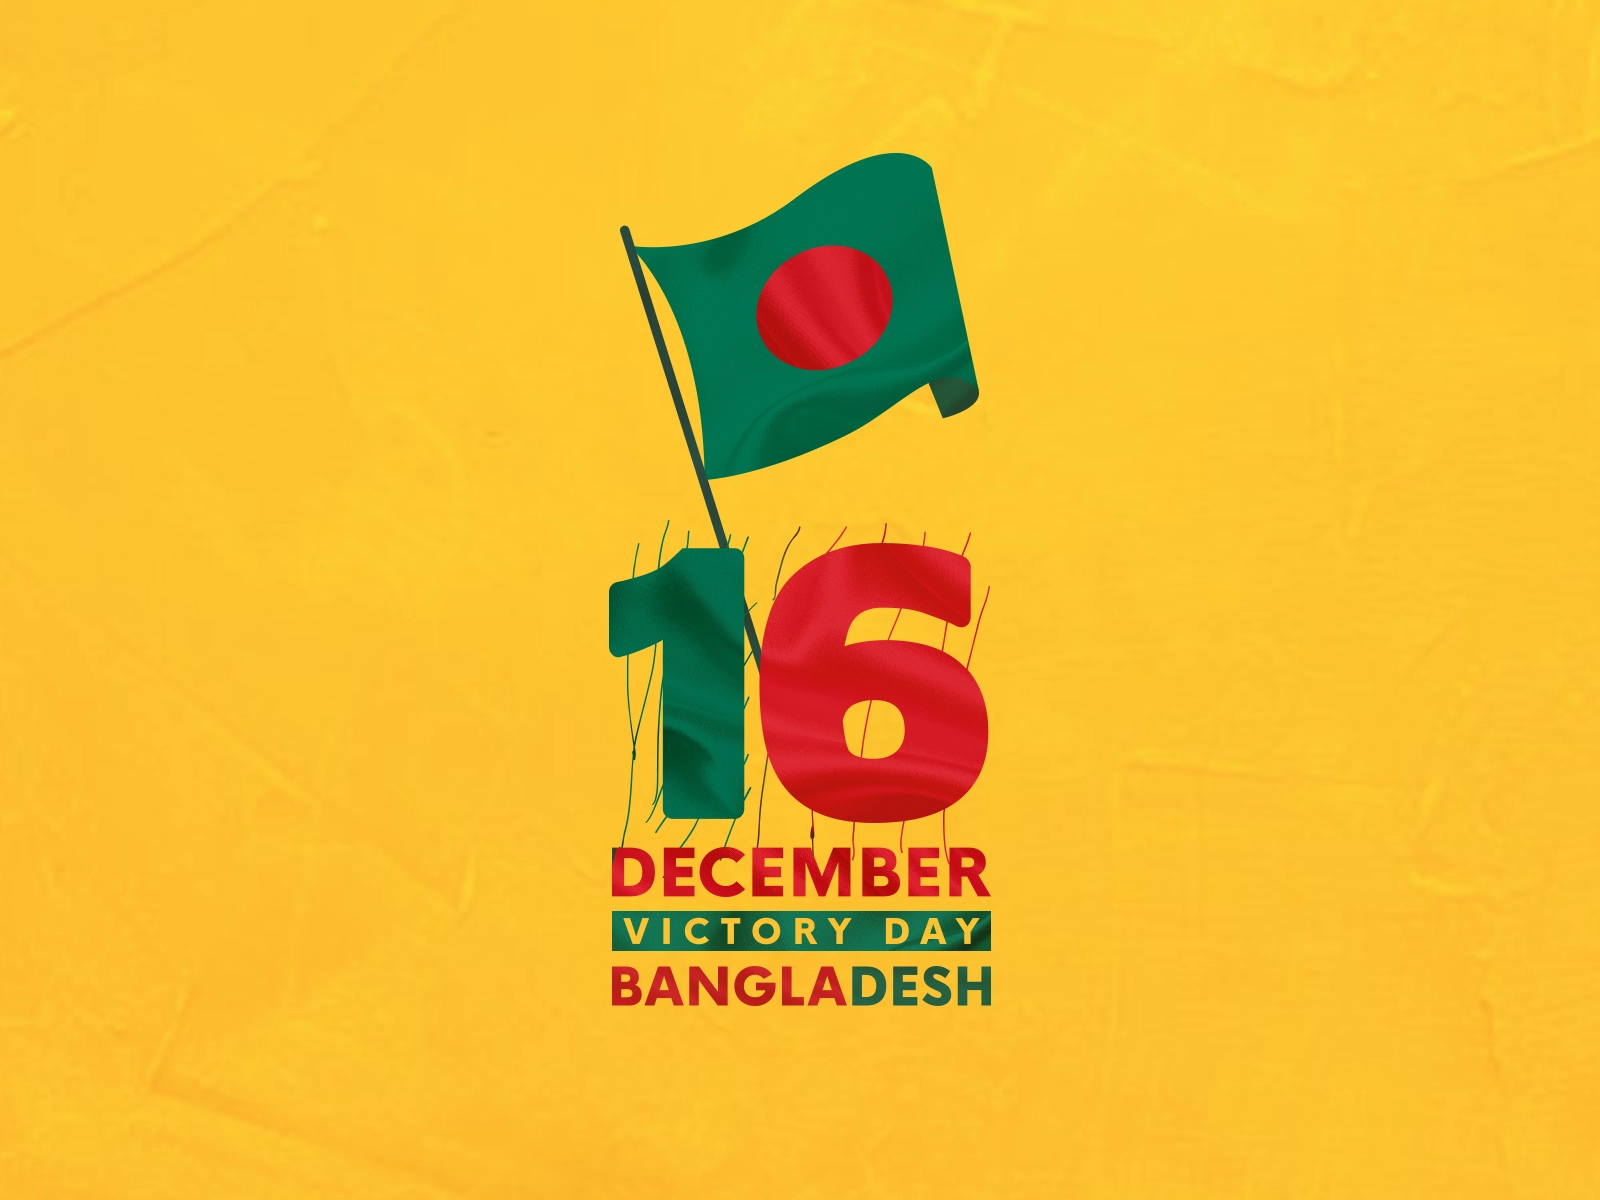 16 December Victory Day Bangladesh